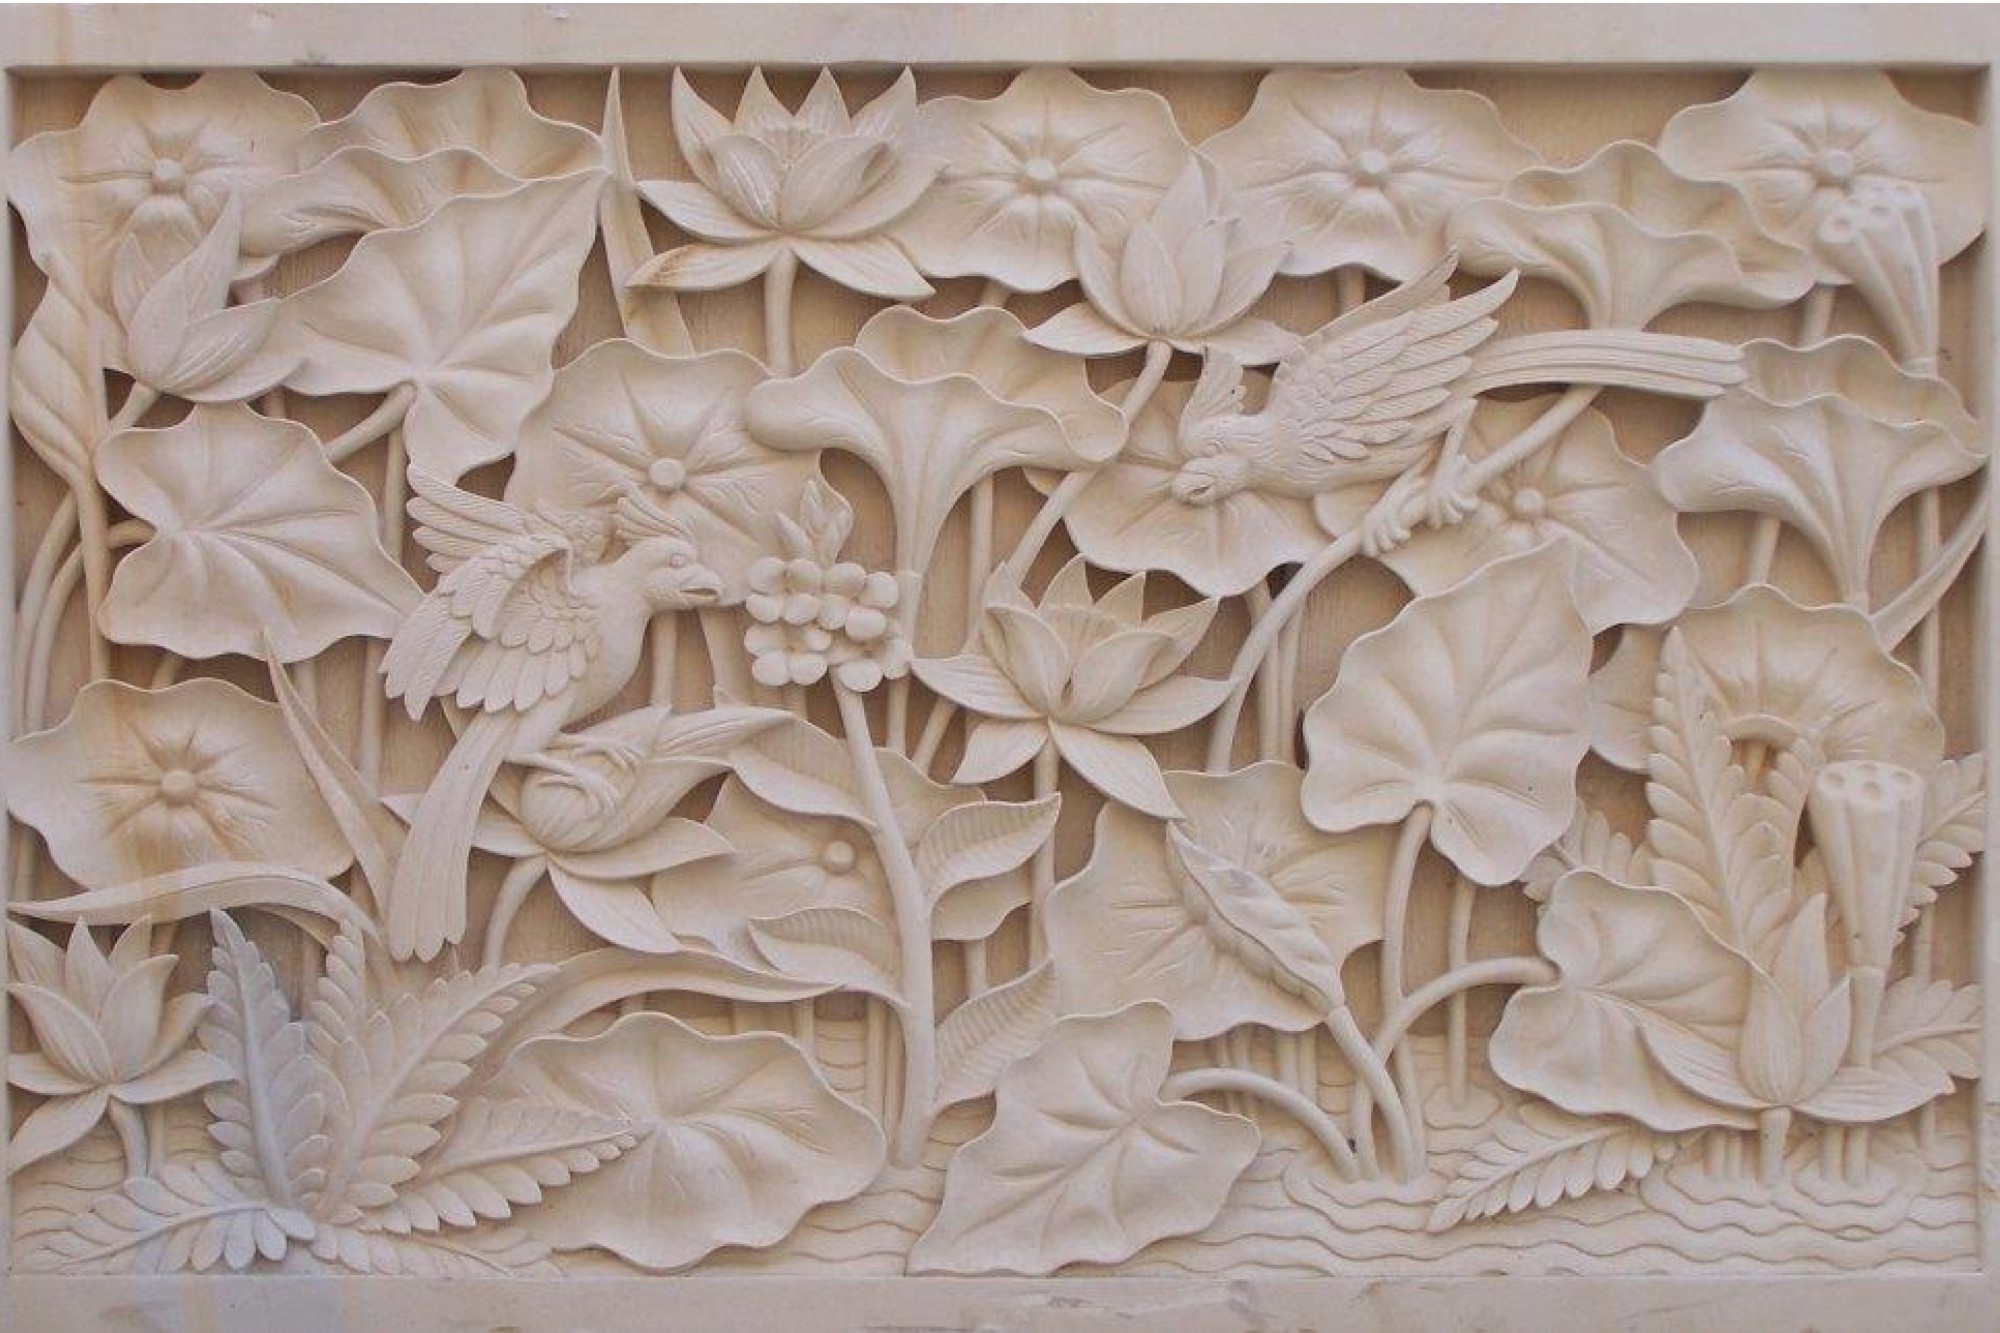 Stone Art unveils Balinese Relief Panels